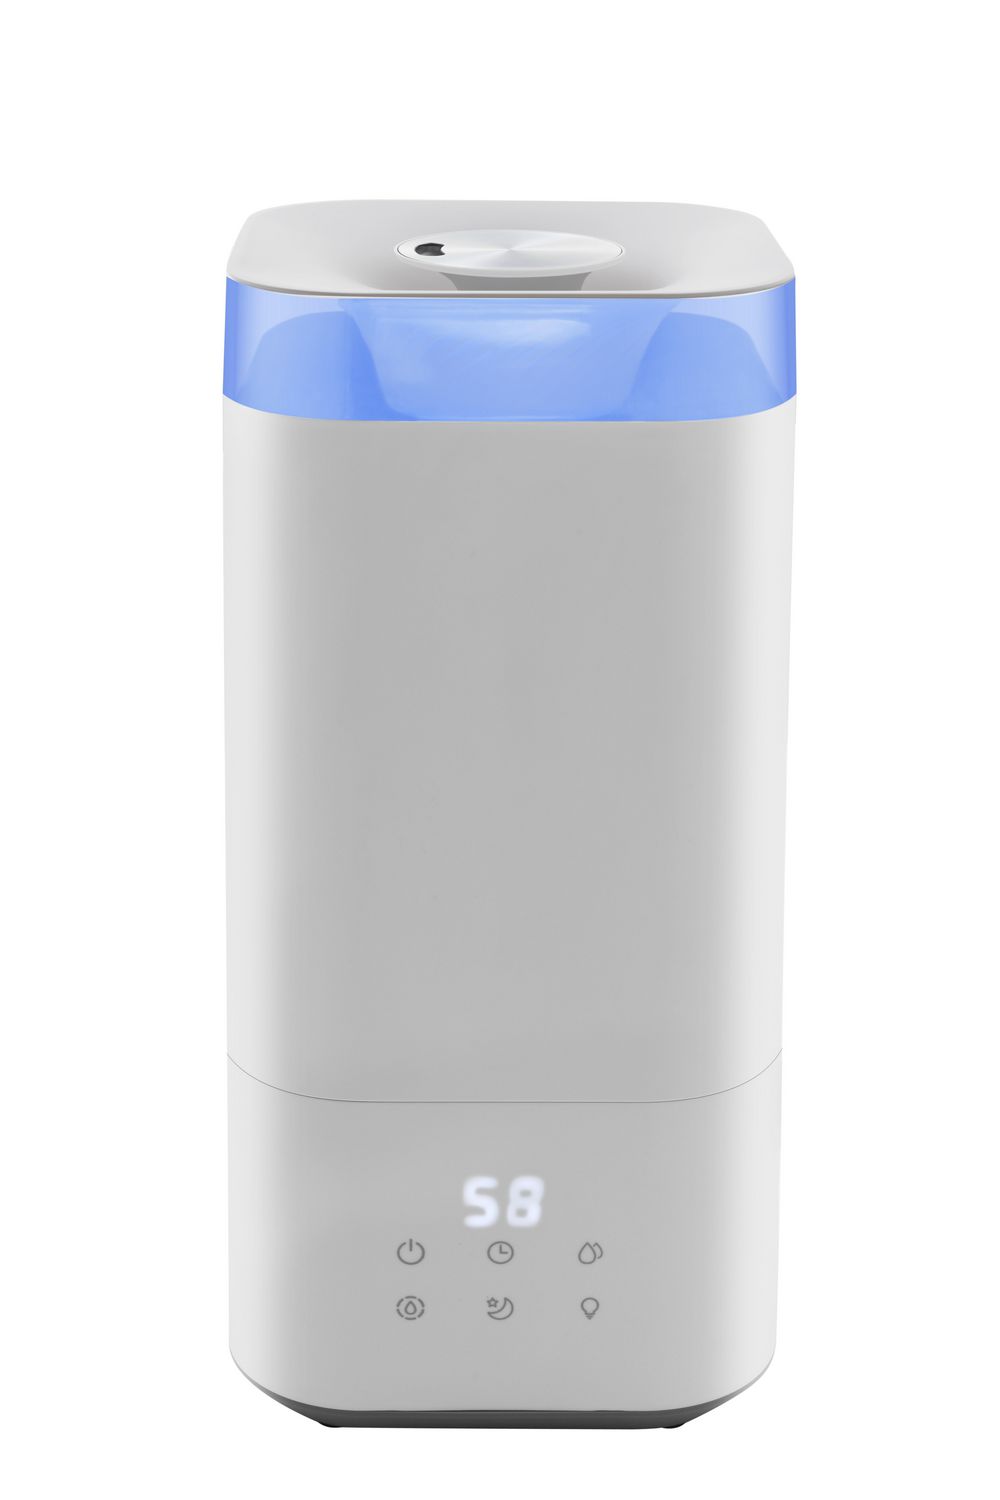 Honeywell HUL545WC Ultra Comfortᵀᴹ Cool Mist Humidifier 